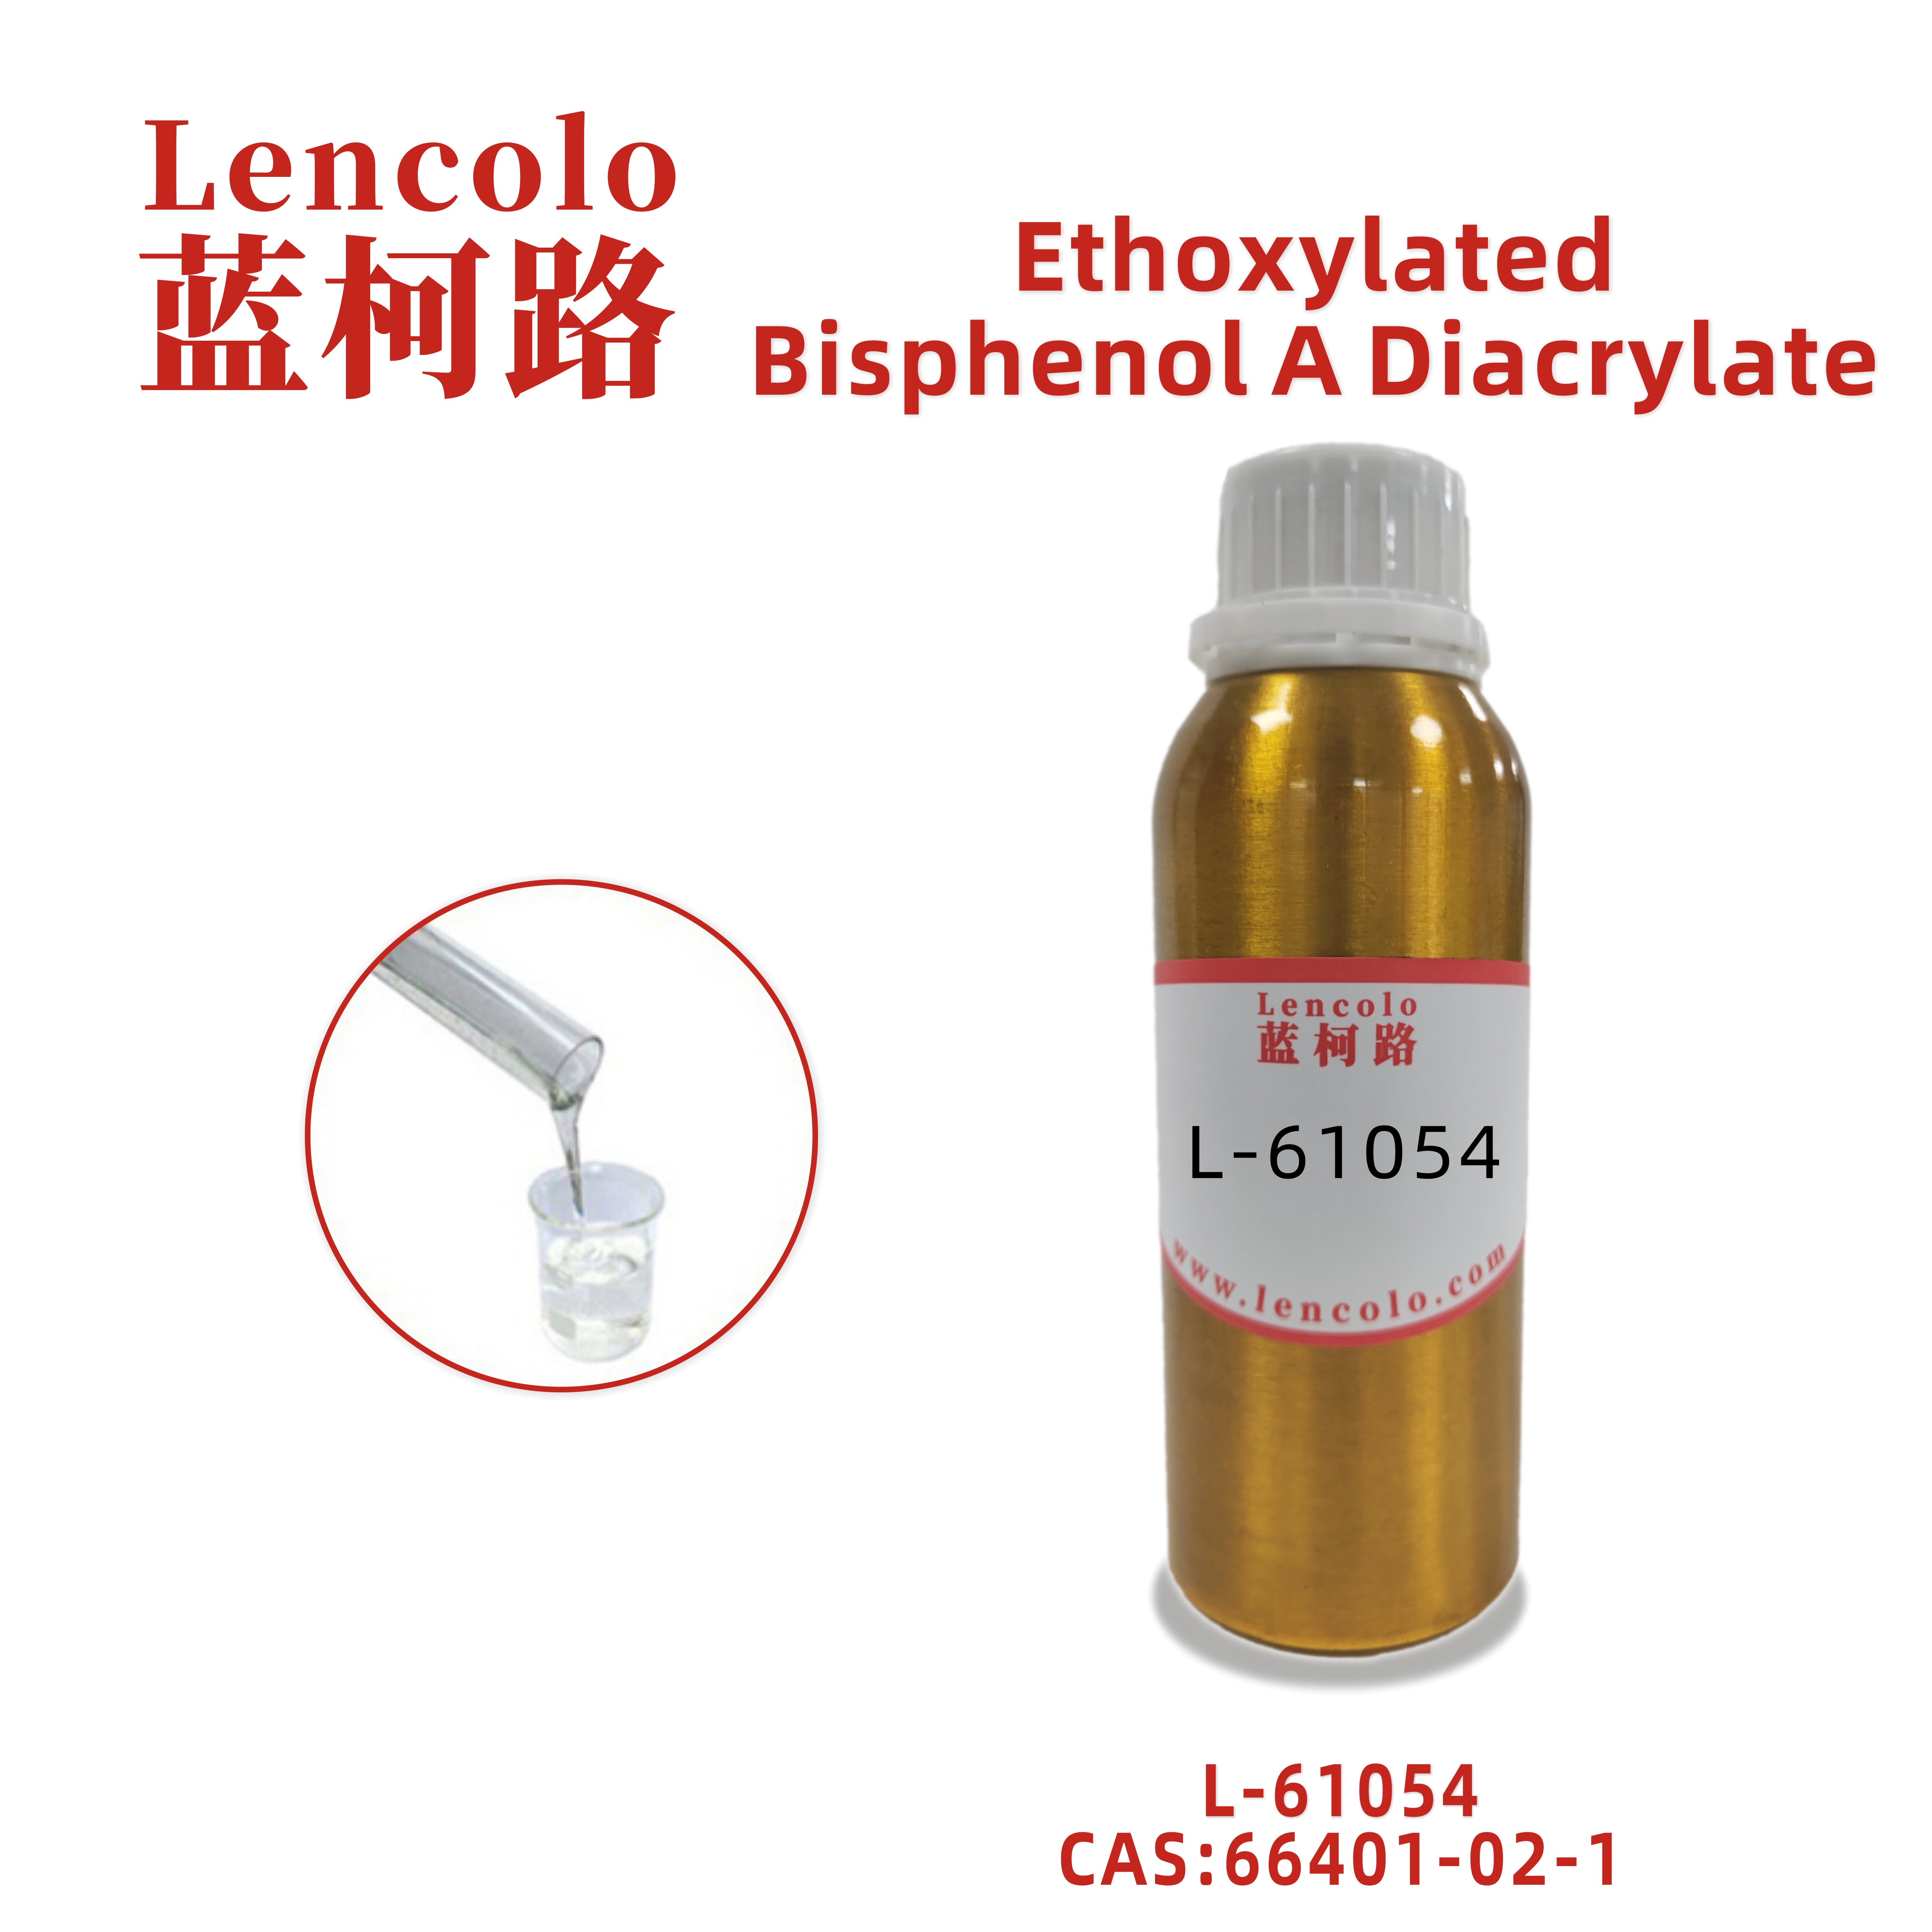 L-61054 (BPA3EODA) Ethoxylated Bisphenol A Diacrylate Low shrinkage and good flexibility monomer CAS#66401-02-1